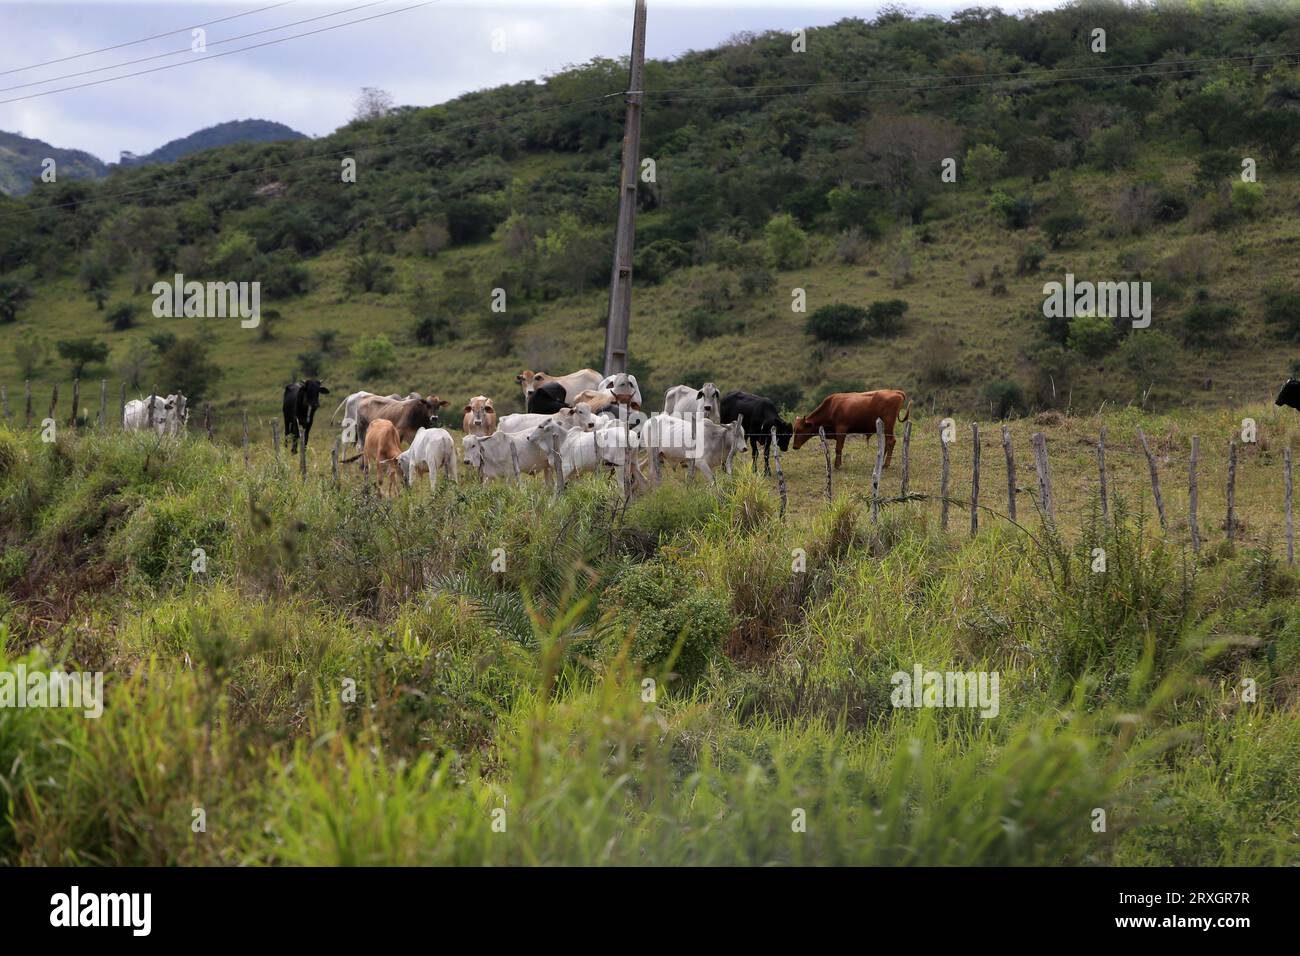 feira de santana, bahia, brasilien - 4. september 2022: Viehzucht in einem Gebiet des caatinga-Bioms im Nordosten Brasiliens. Stockfoto